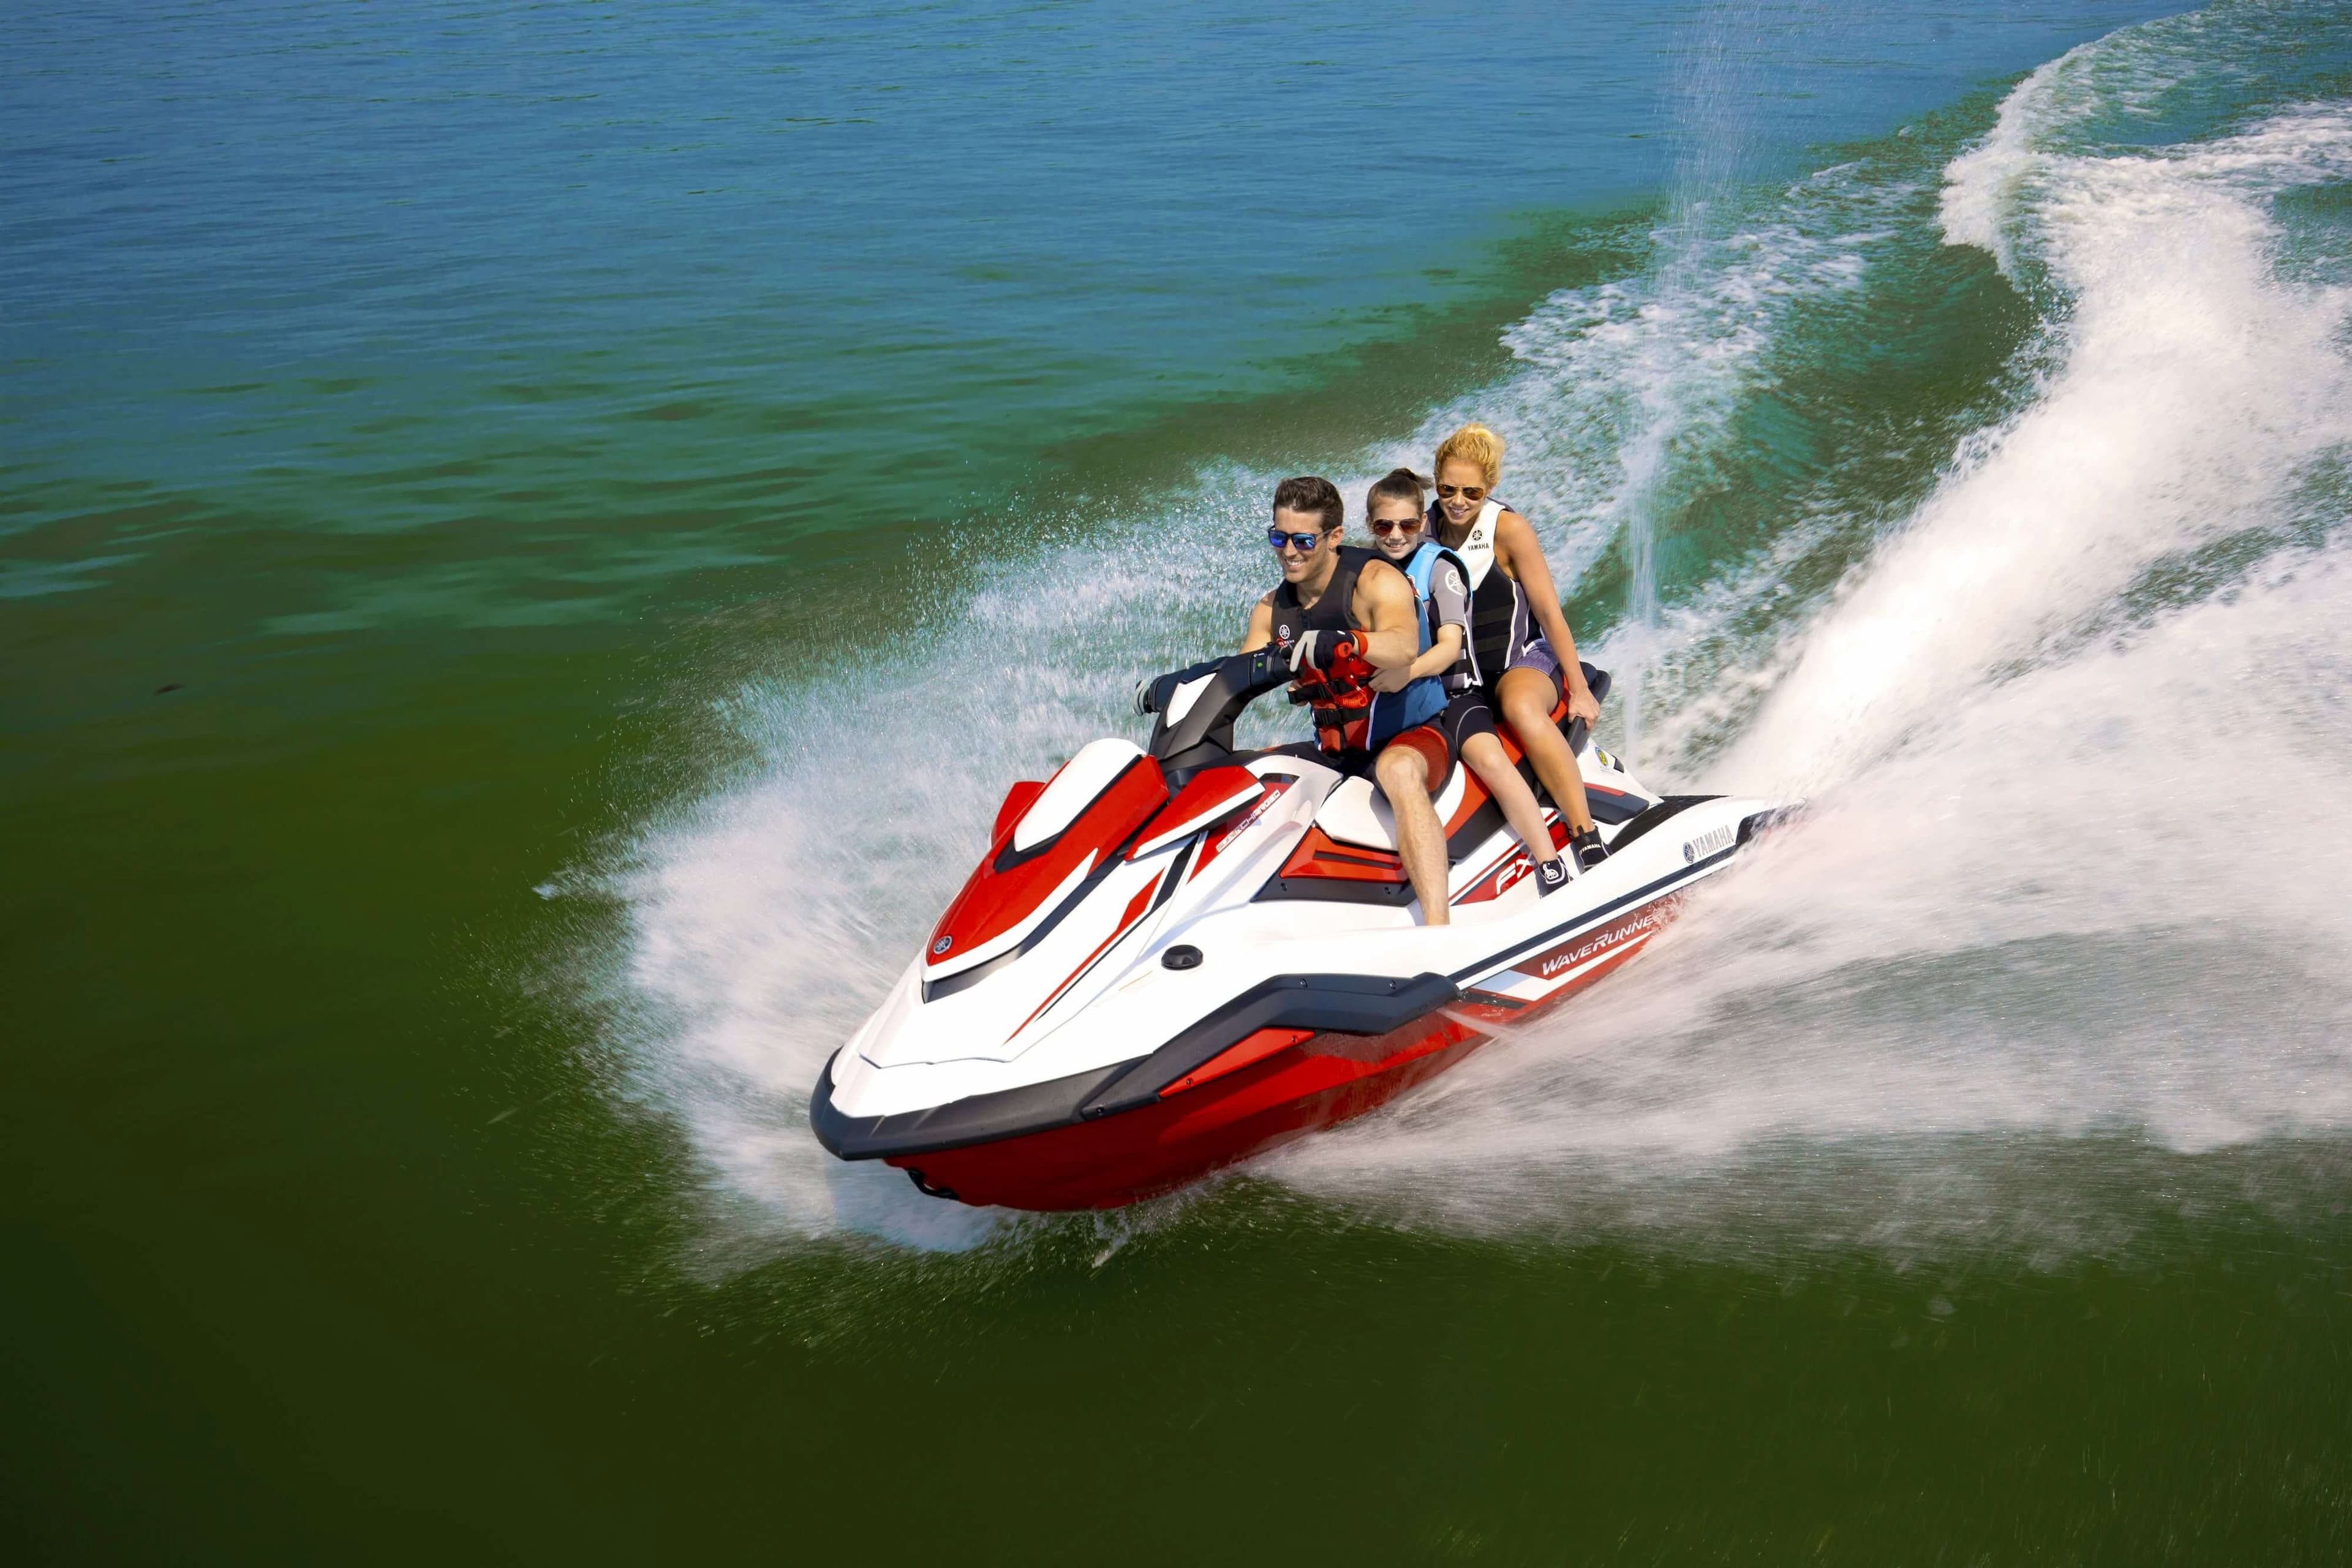 Fast family ride on Jet ski boat splashing water dramatically 